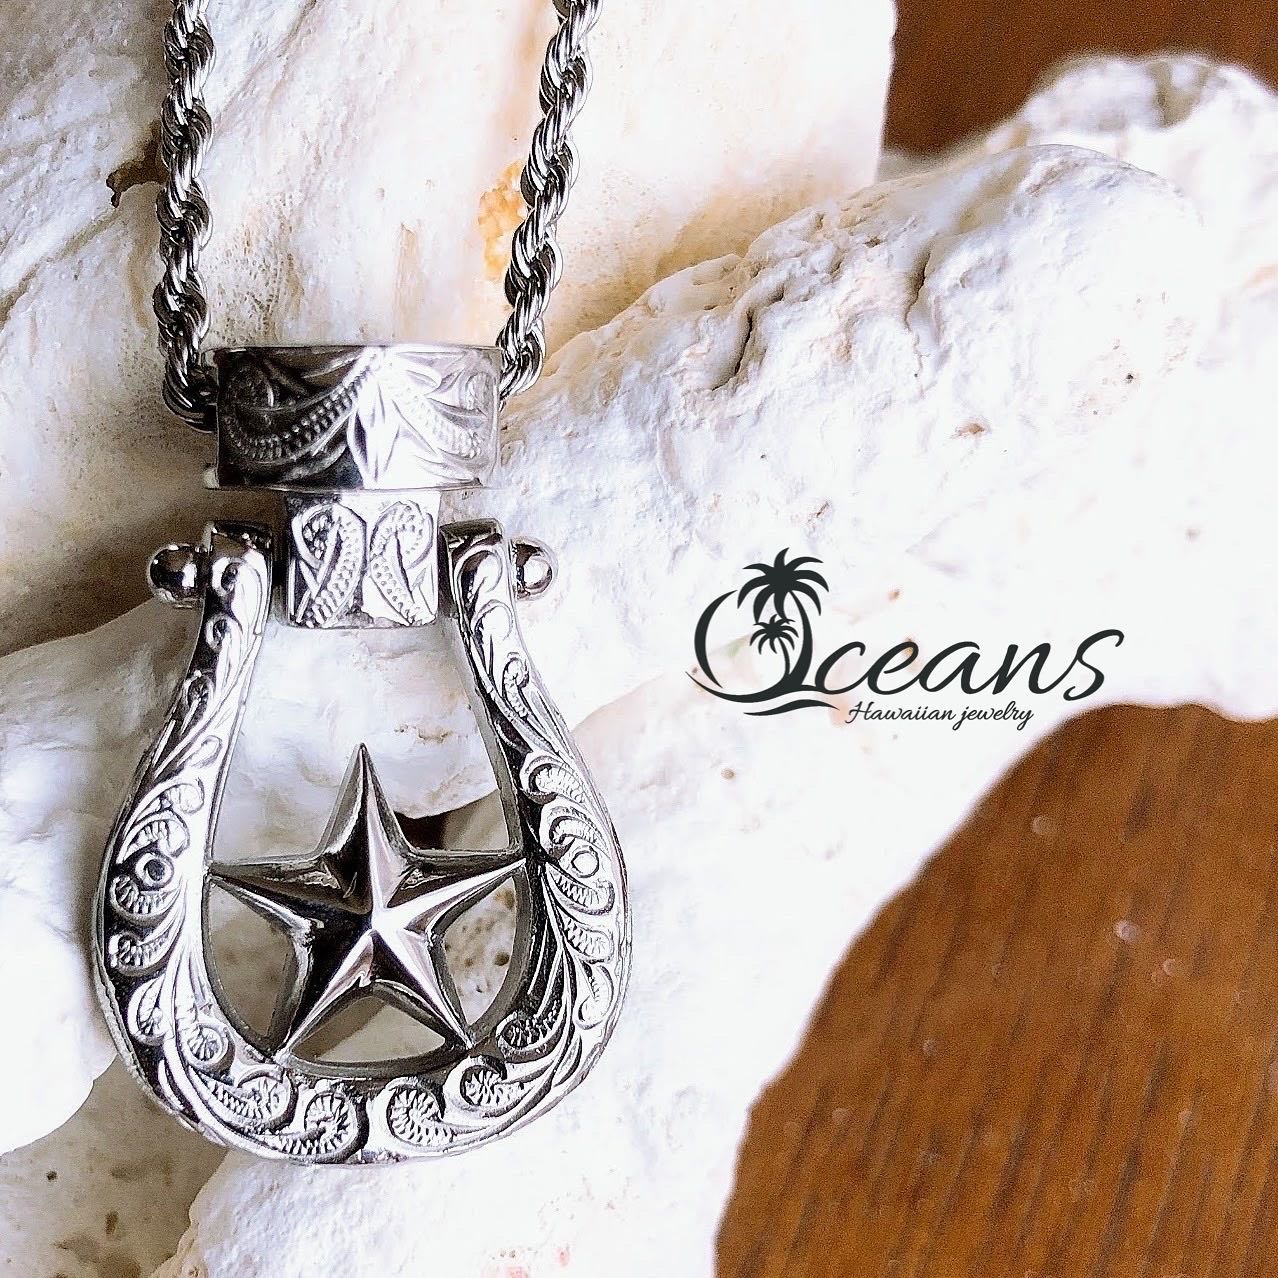 Oceans Hawaiian jewelry（オーシャンズハワイアンジュエリー)